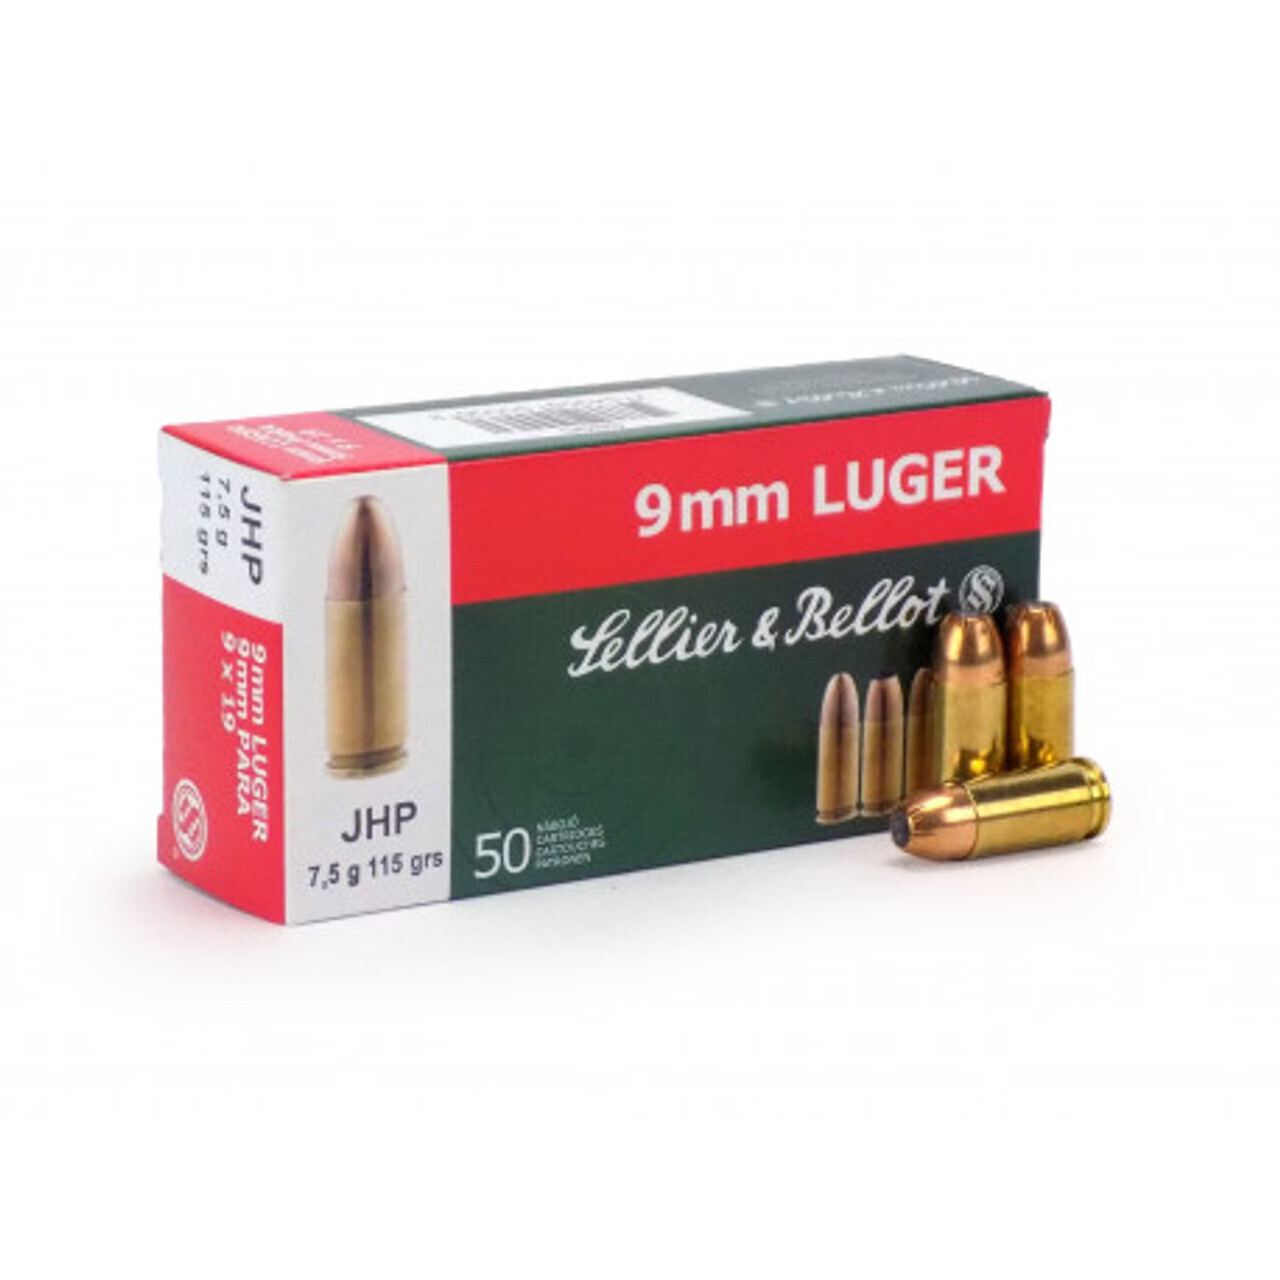 Sellier & Bellot Pistol Ammo in 9mm Luger (115 grain / 7.5 gram) FMJ Box of 50